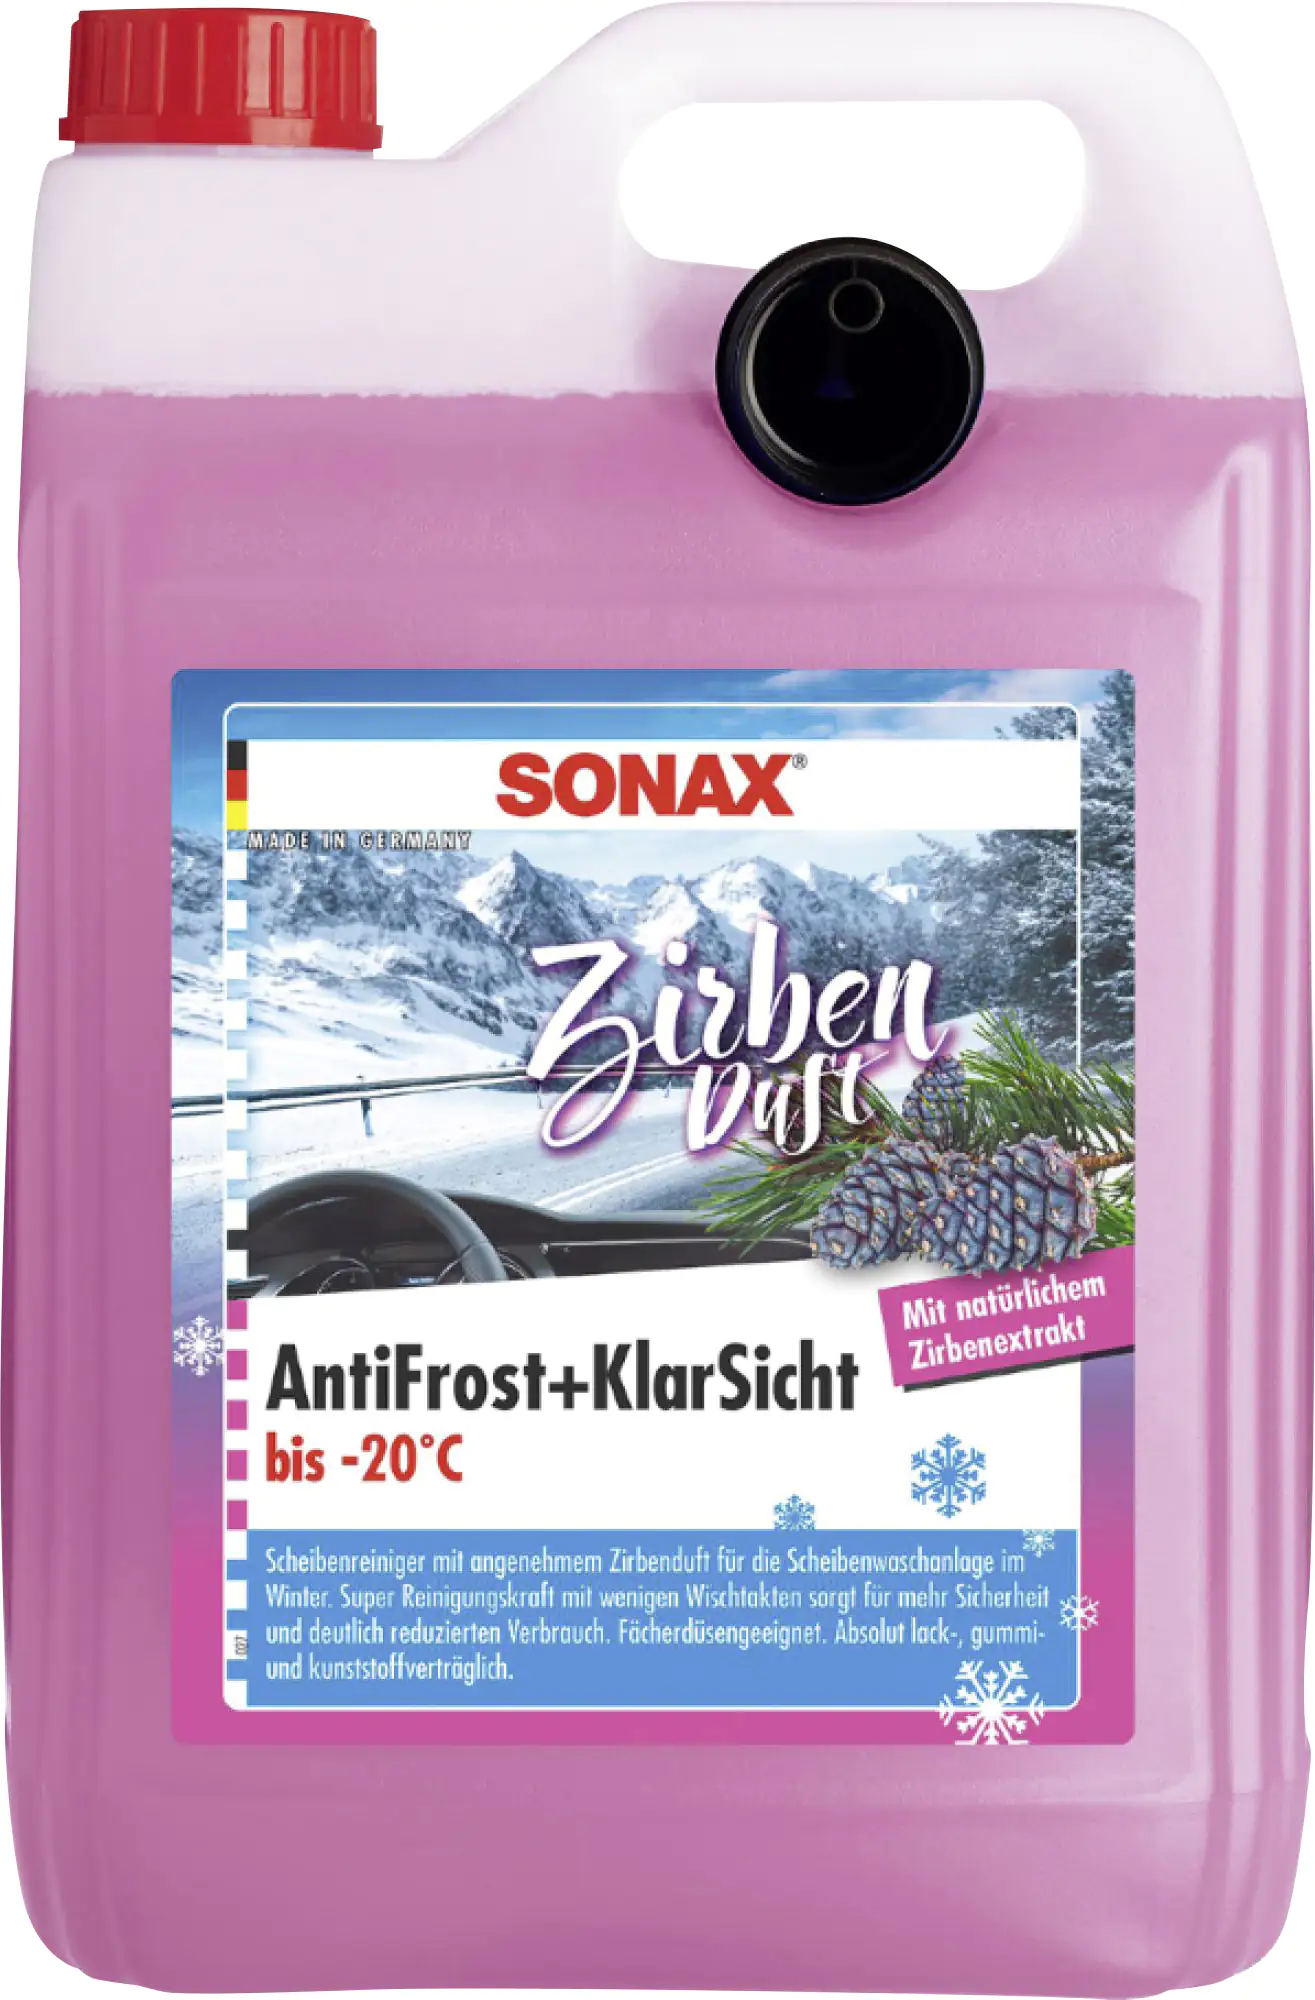 SONAX 01345000 AntiFrost+KlarSicht bis -18 °C Citrus 5 l